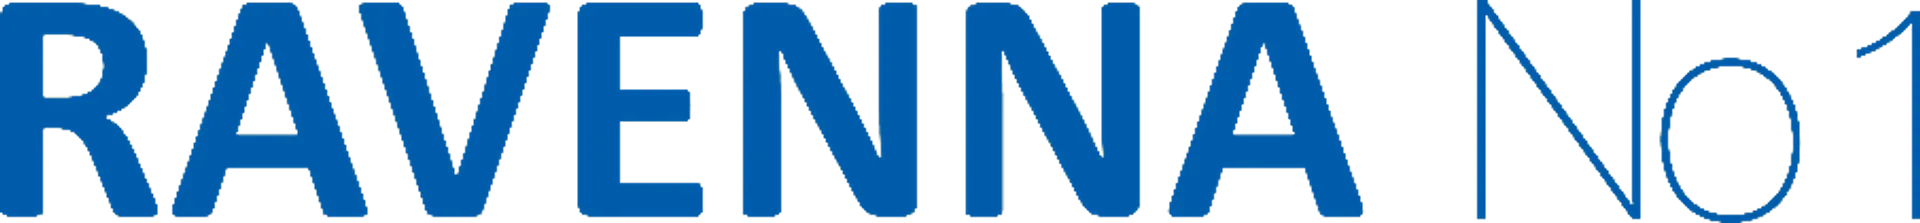 RAVENNA logo